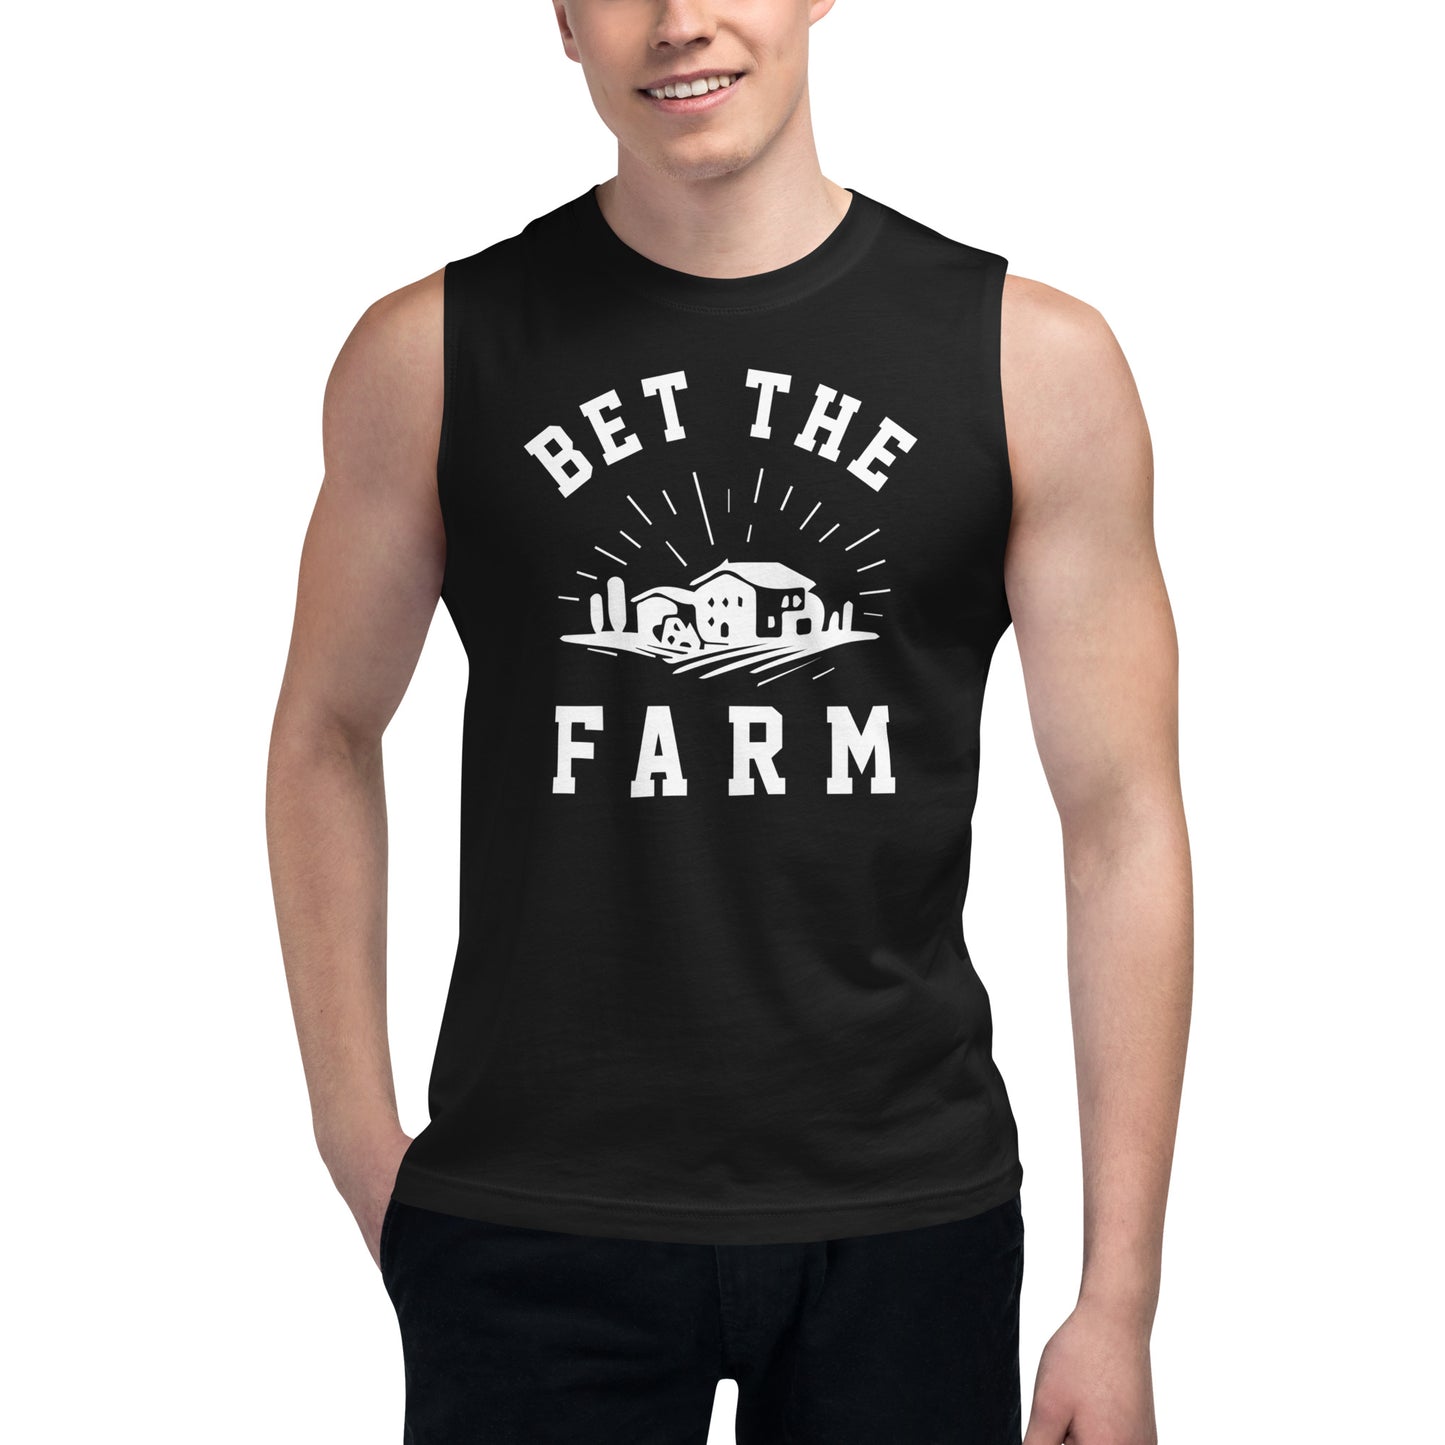 Bet The Farm Unisex Muscle Shirt